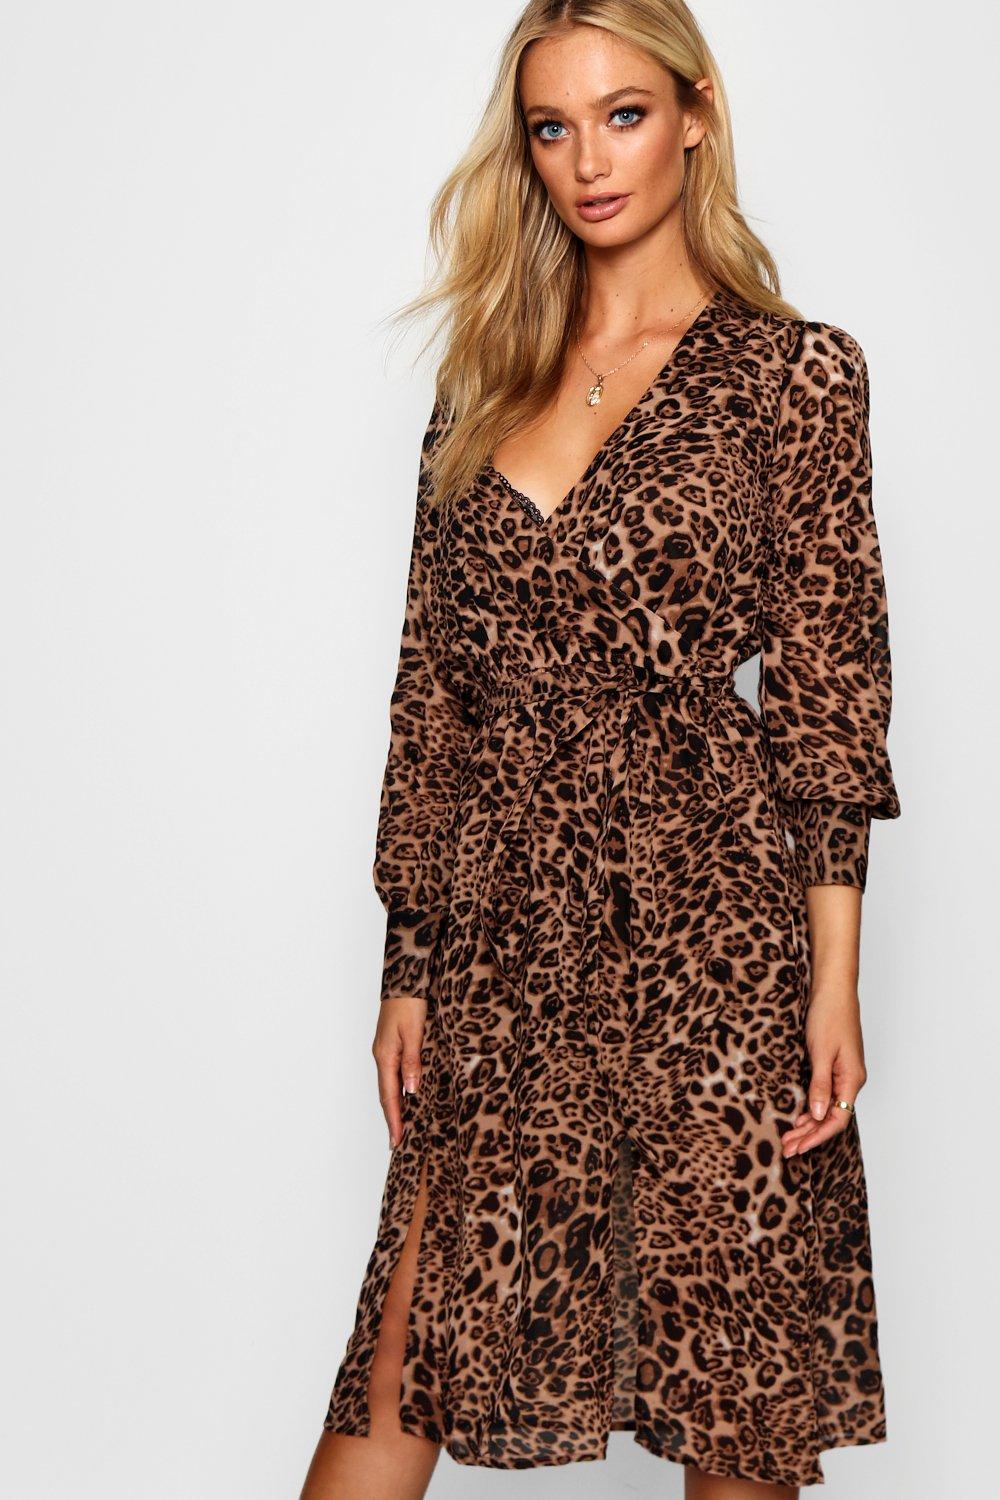 boohoo leopard dress